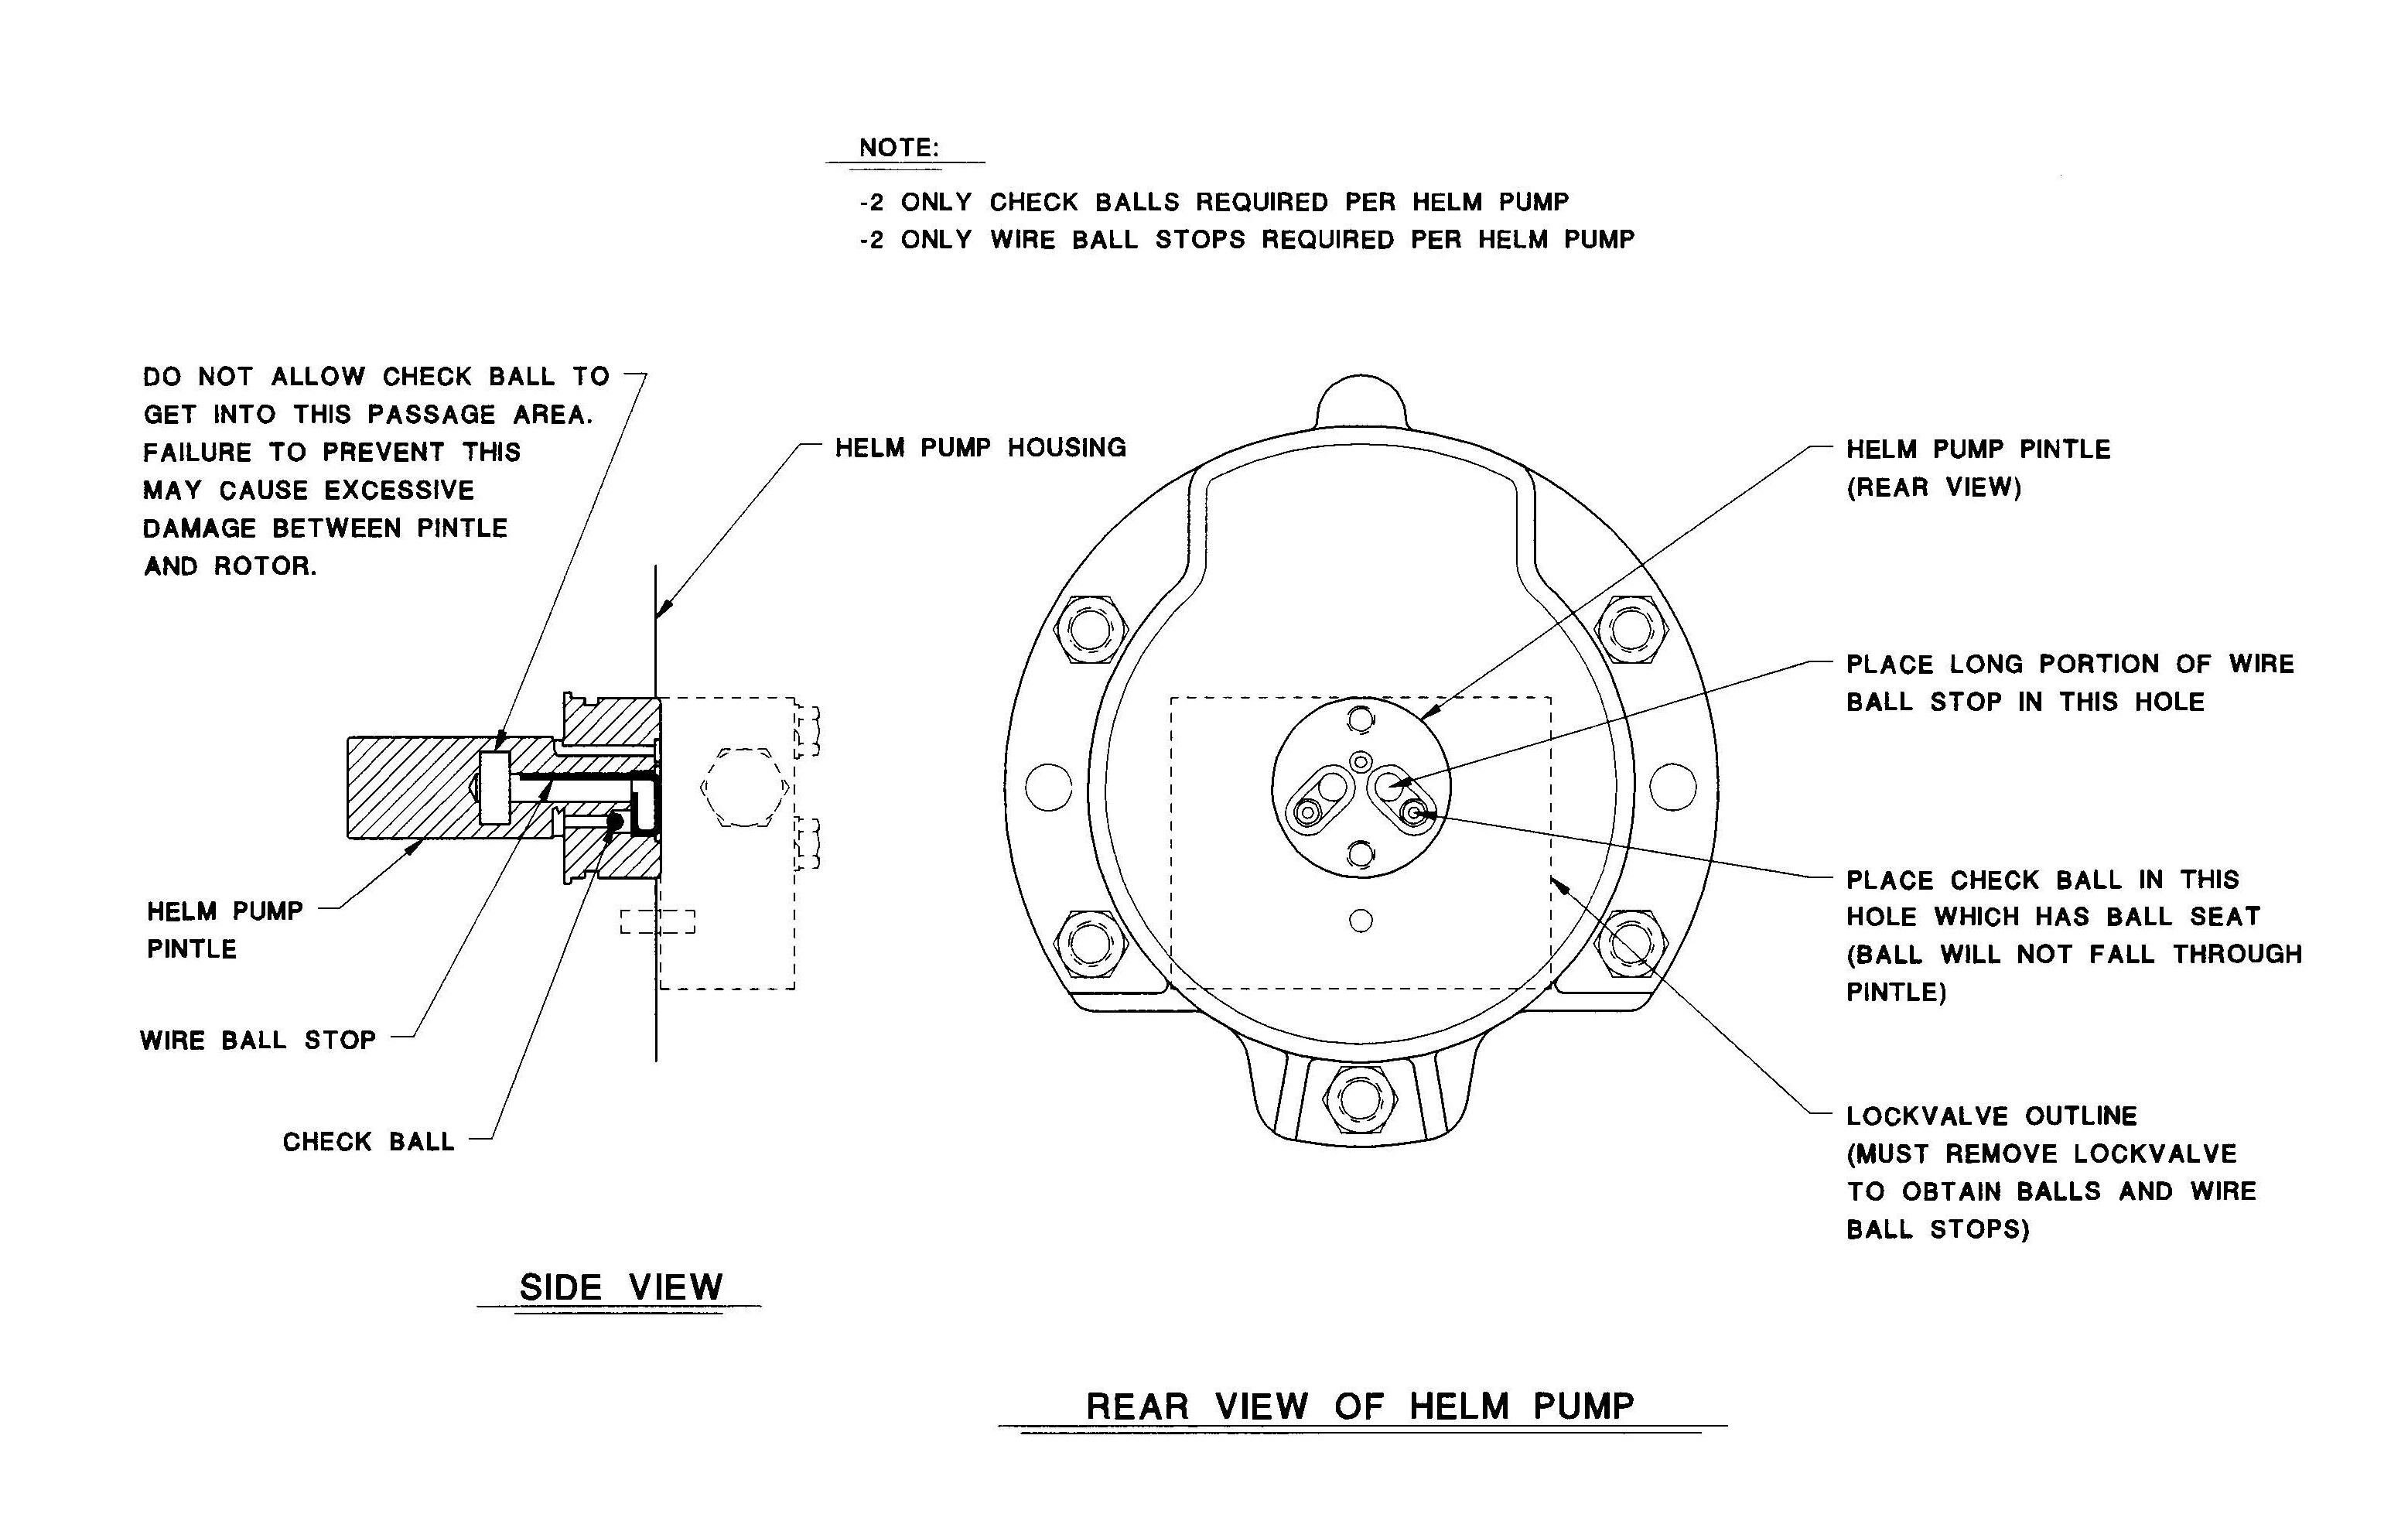 Model B3-B4 Helm Pump Check Ball Orientation Diagram